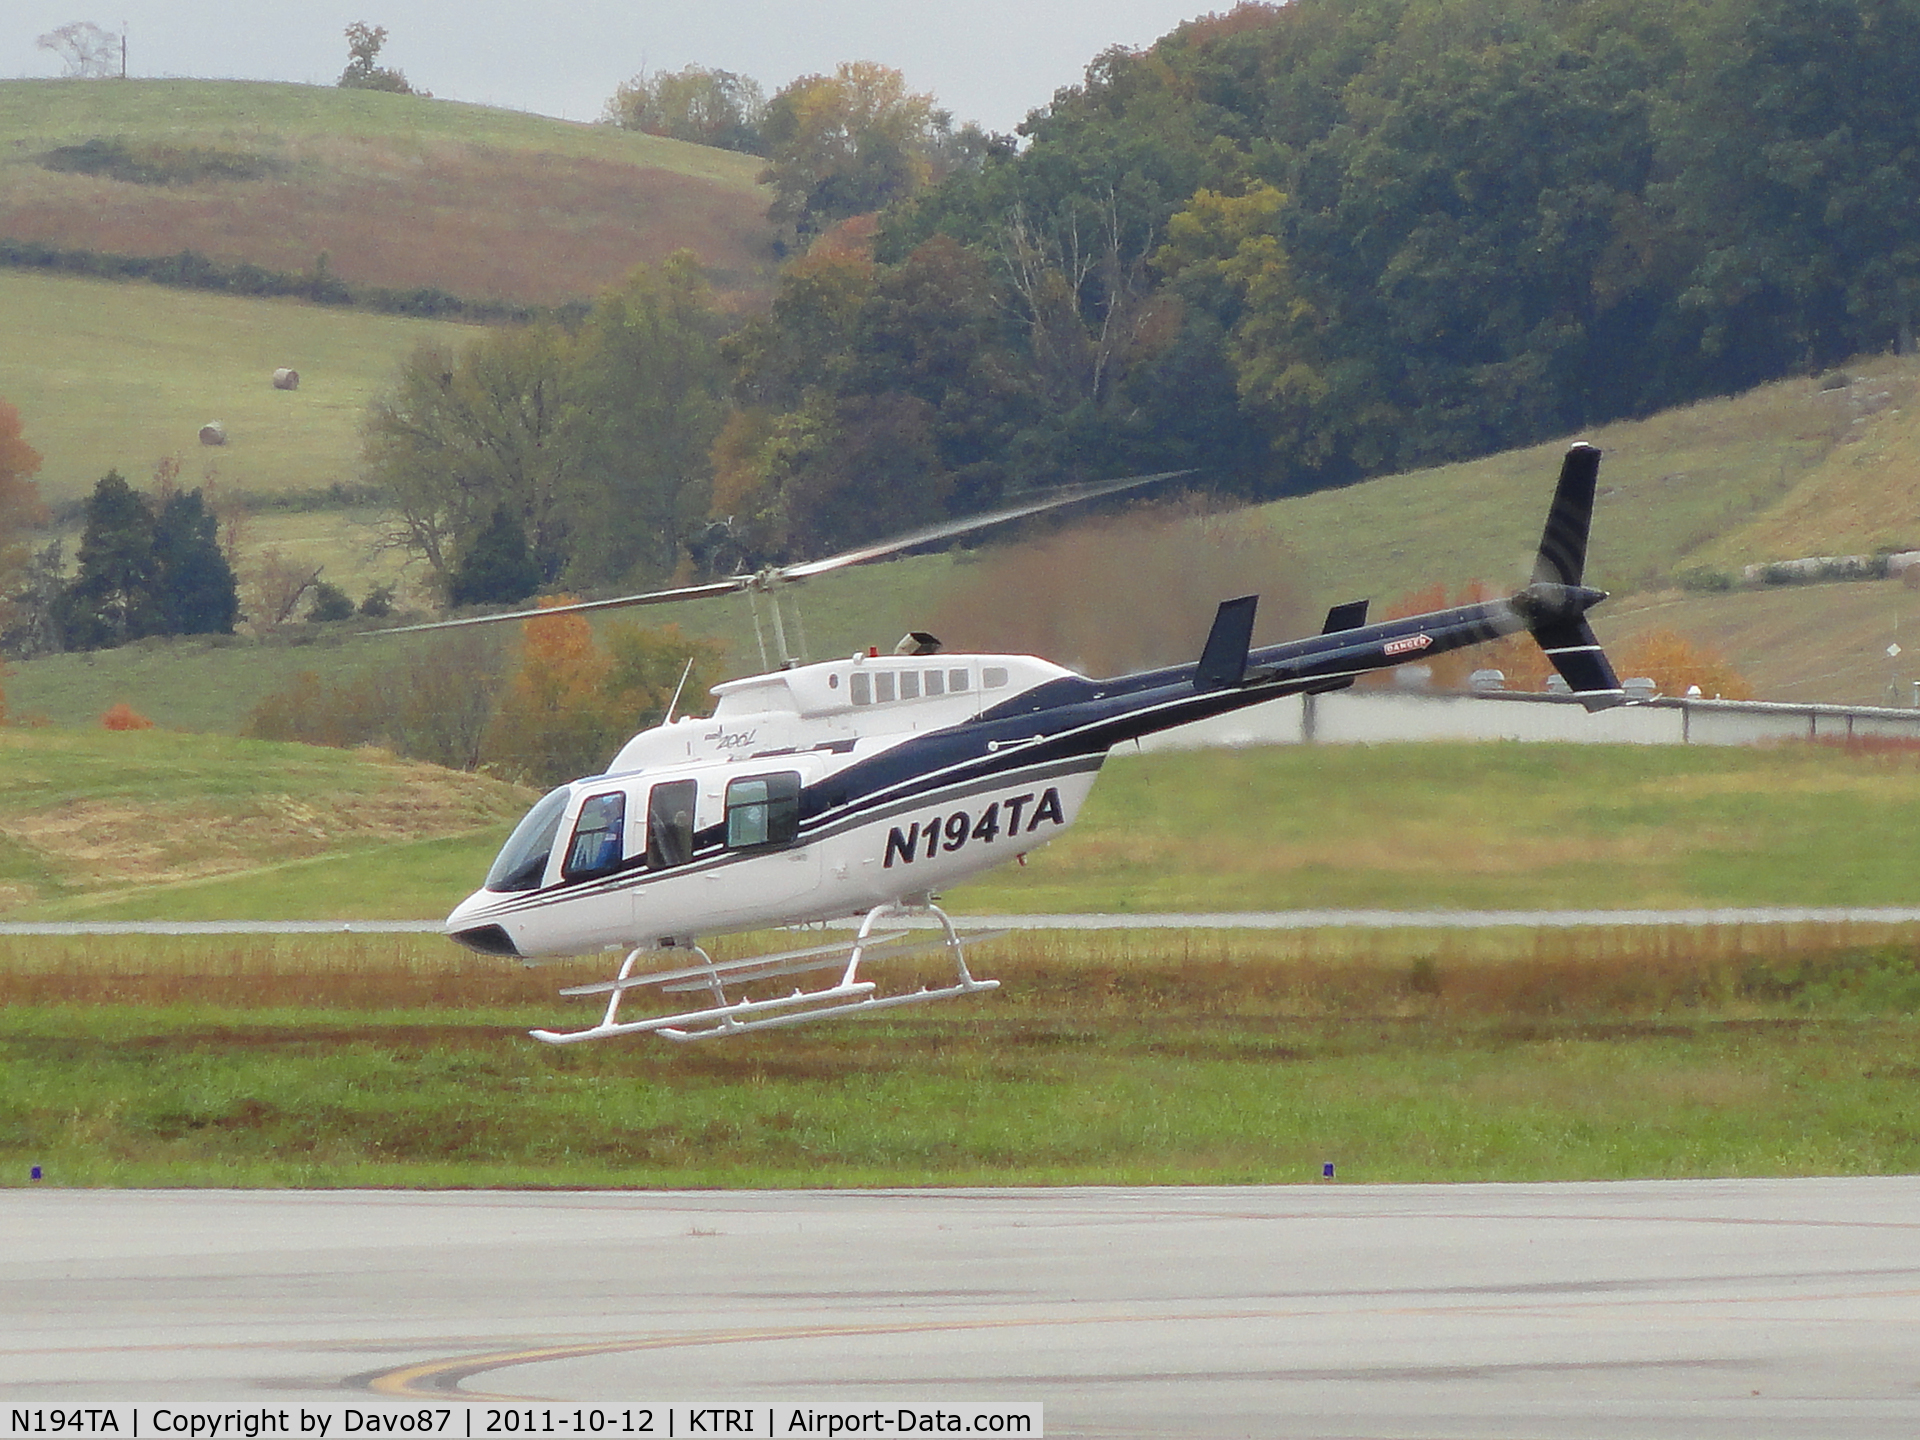 N194TA, 1991 Bell 206L-3 LongRanger III C/N 51542, Bell 206L-3 Helicopter practicing landings at Tri-Cities Airport (KTRI) in Blountville, TN on October 12, 2011.